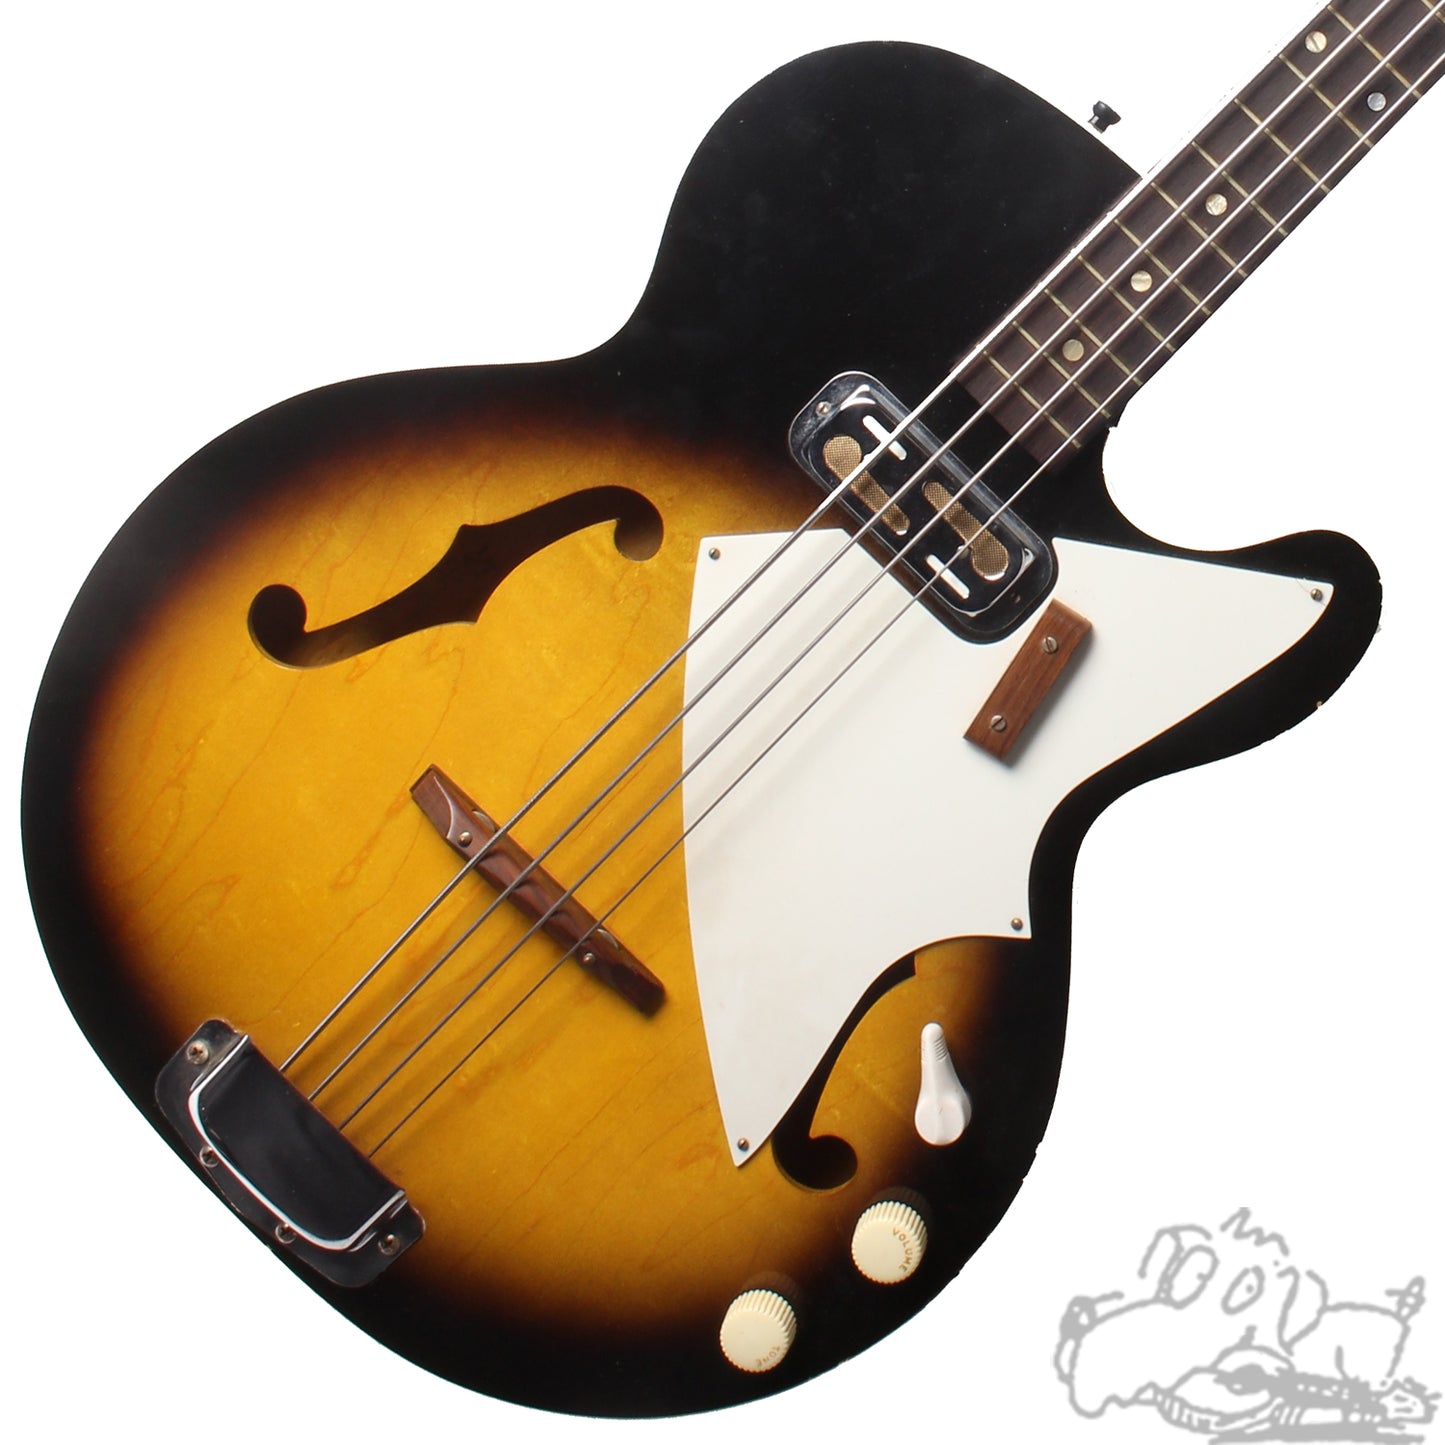 1965 Harmony H-22 Bass